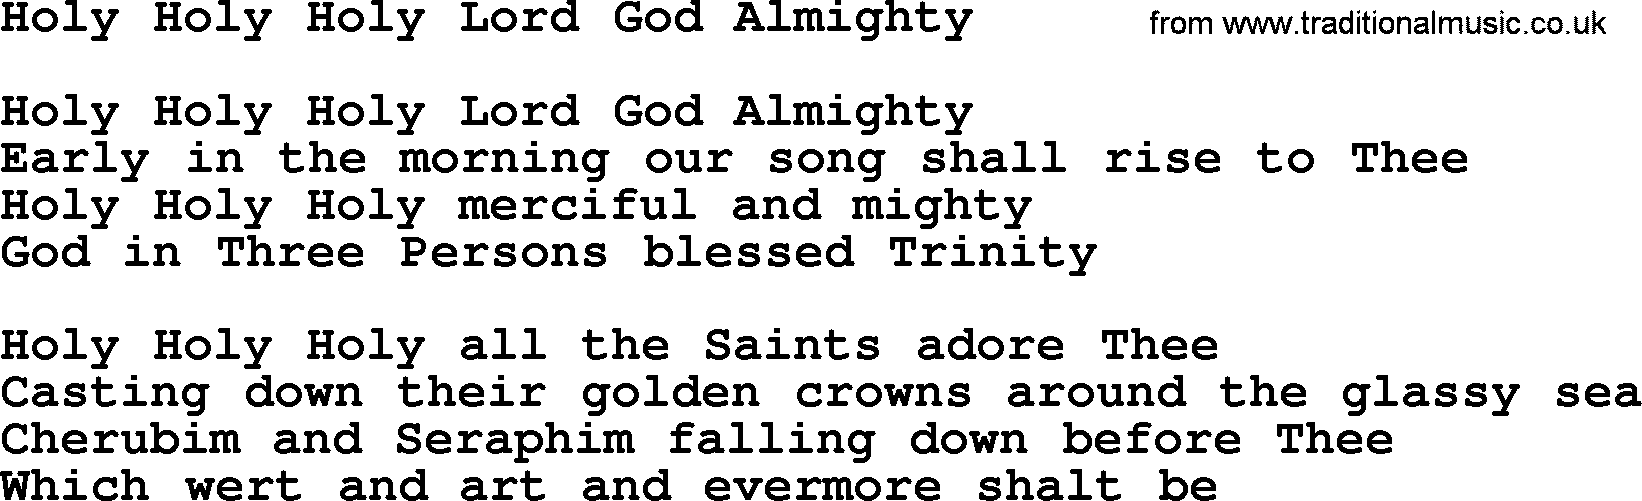 Catholic Hymn: Holy Holy Holy Lord God Almighty lyrics with PDF